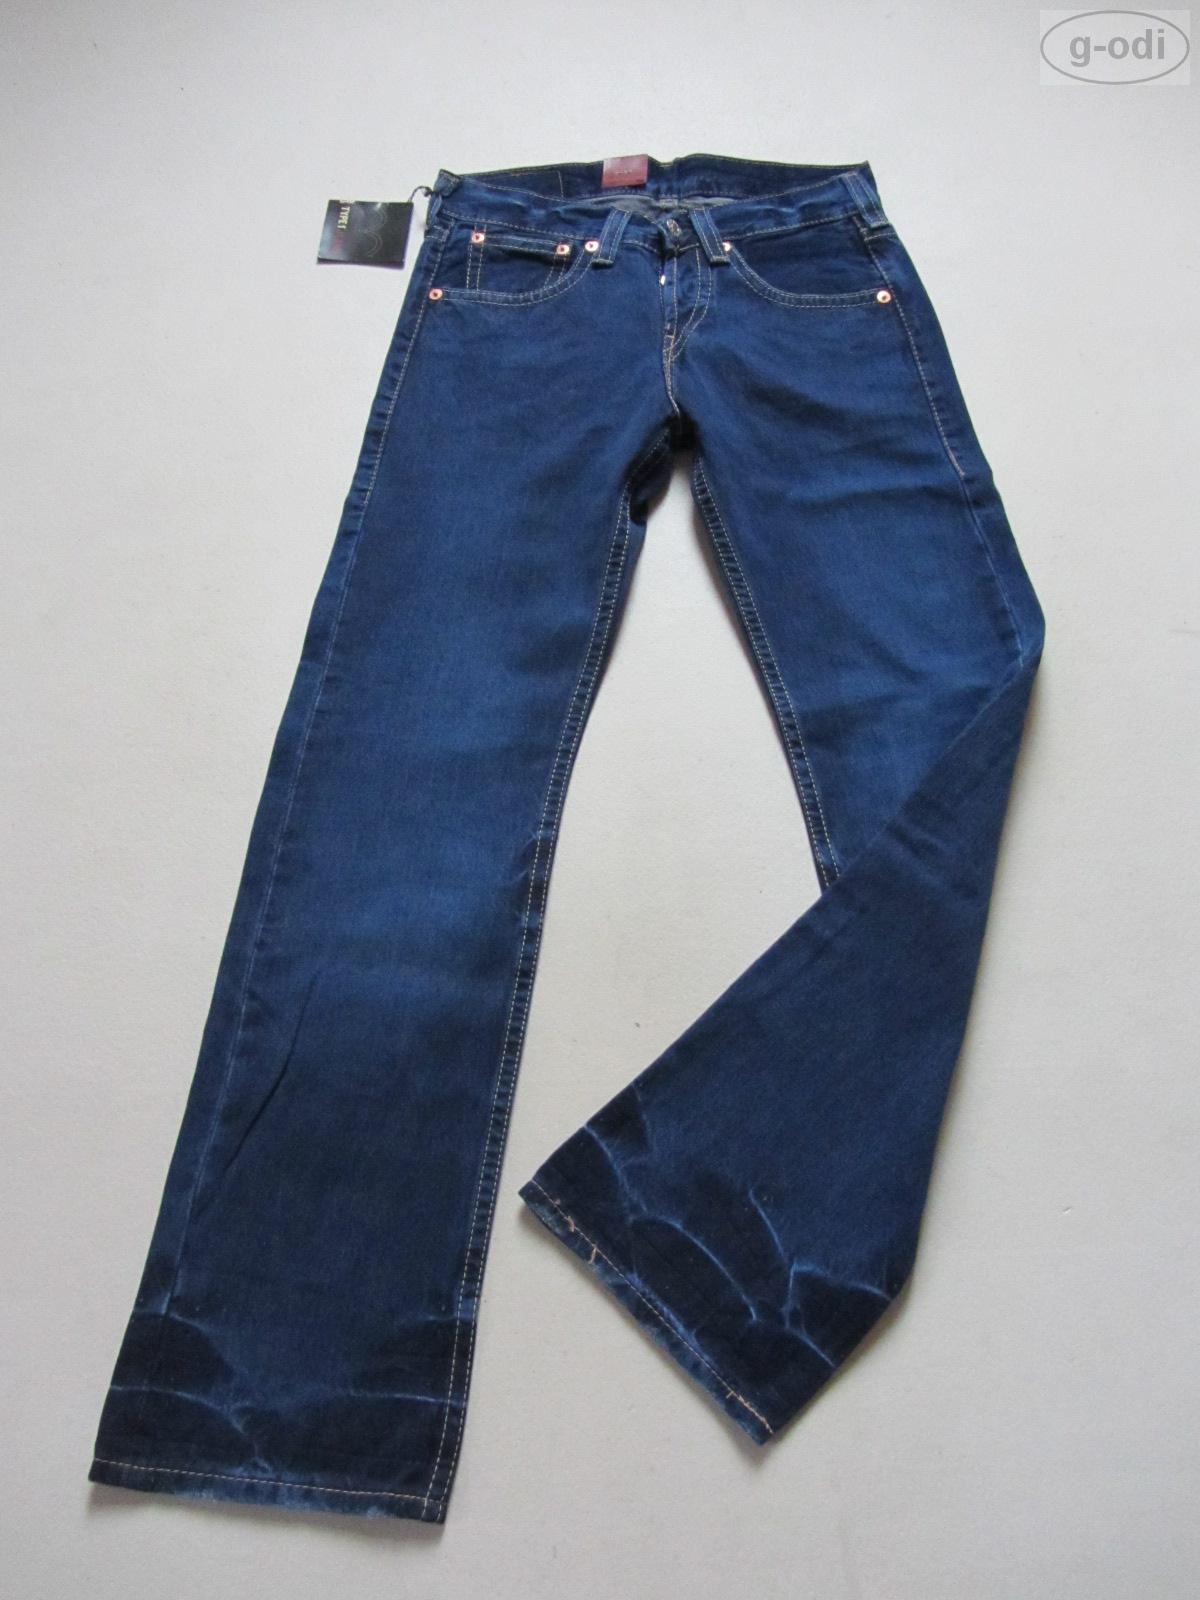 Levi's ® Type 1 Jeans Trousers 901, w 30/L 34, NEW! Rockabilly Vintage ...